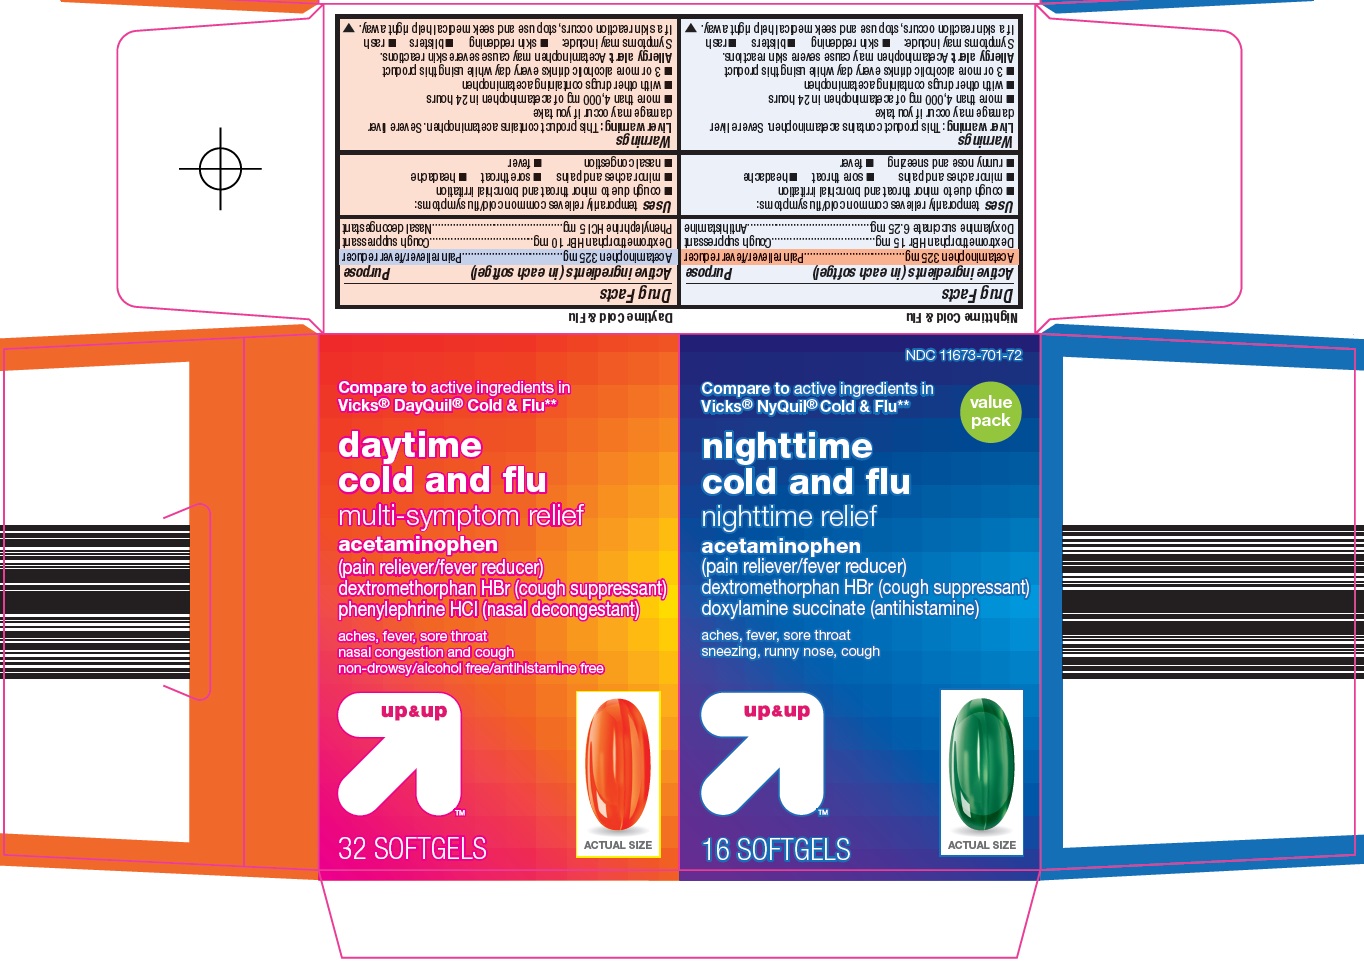 daytime nighttime cold and flu carton image 1